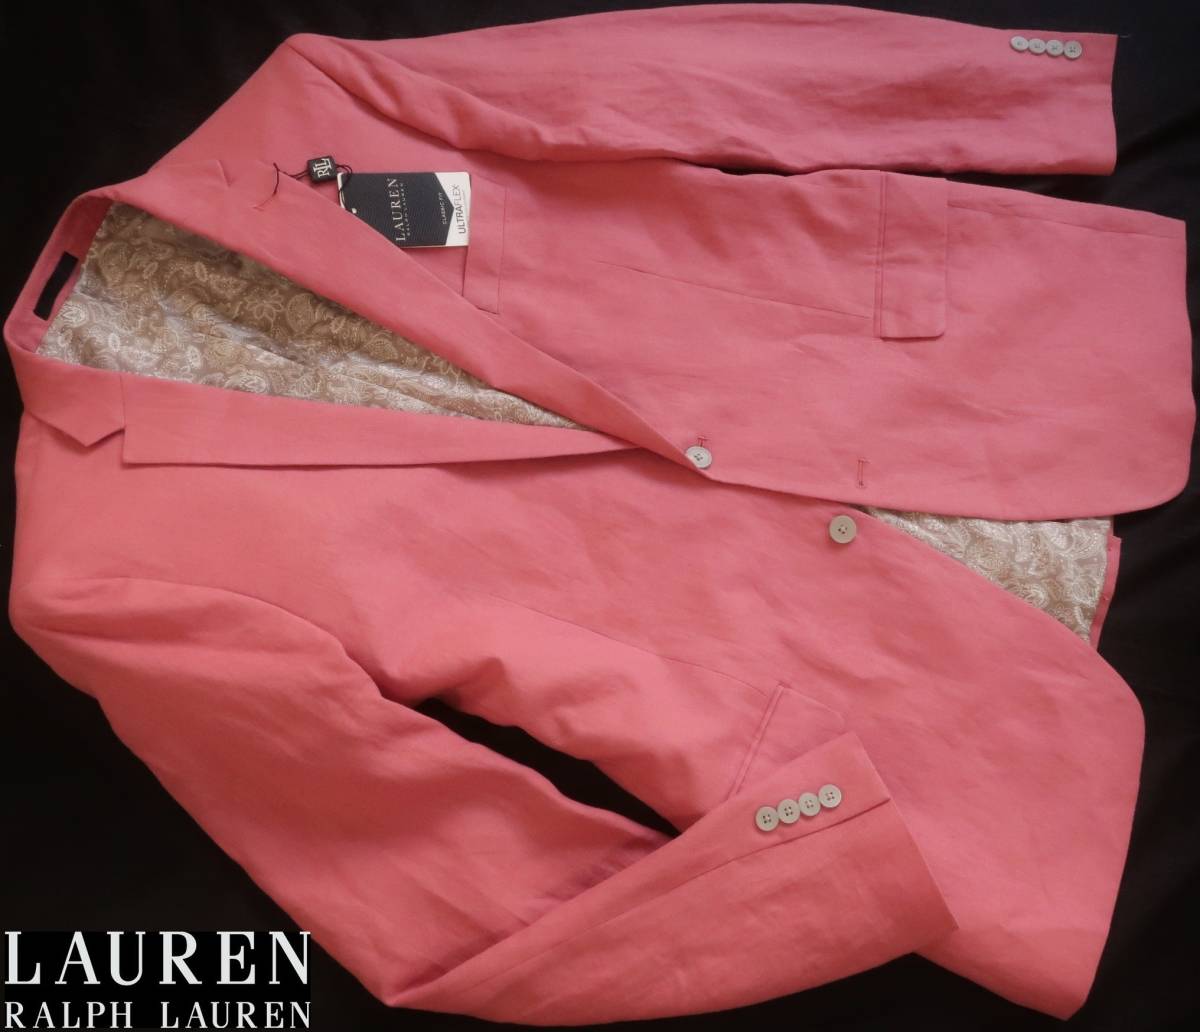  новый товар * Ralph Lauren * лен 100%* розовый linen жакет * soft жакет * summer блейзер XL(44L)*POLO RALPH*293